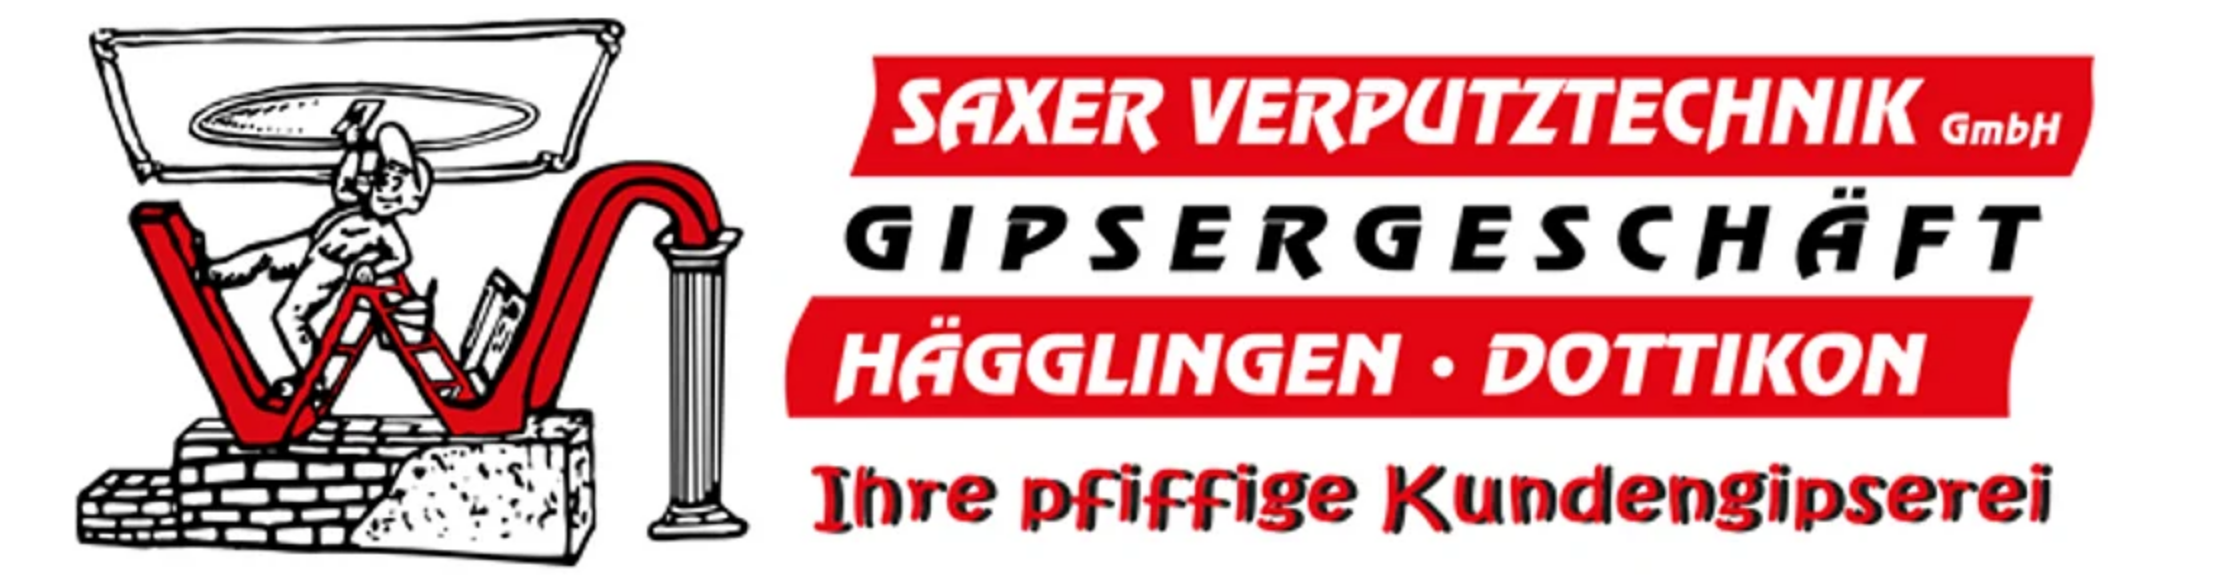 Saxer Verputztechnik GmbH